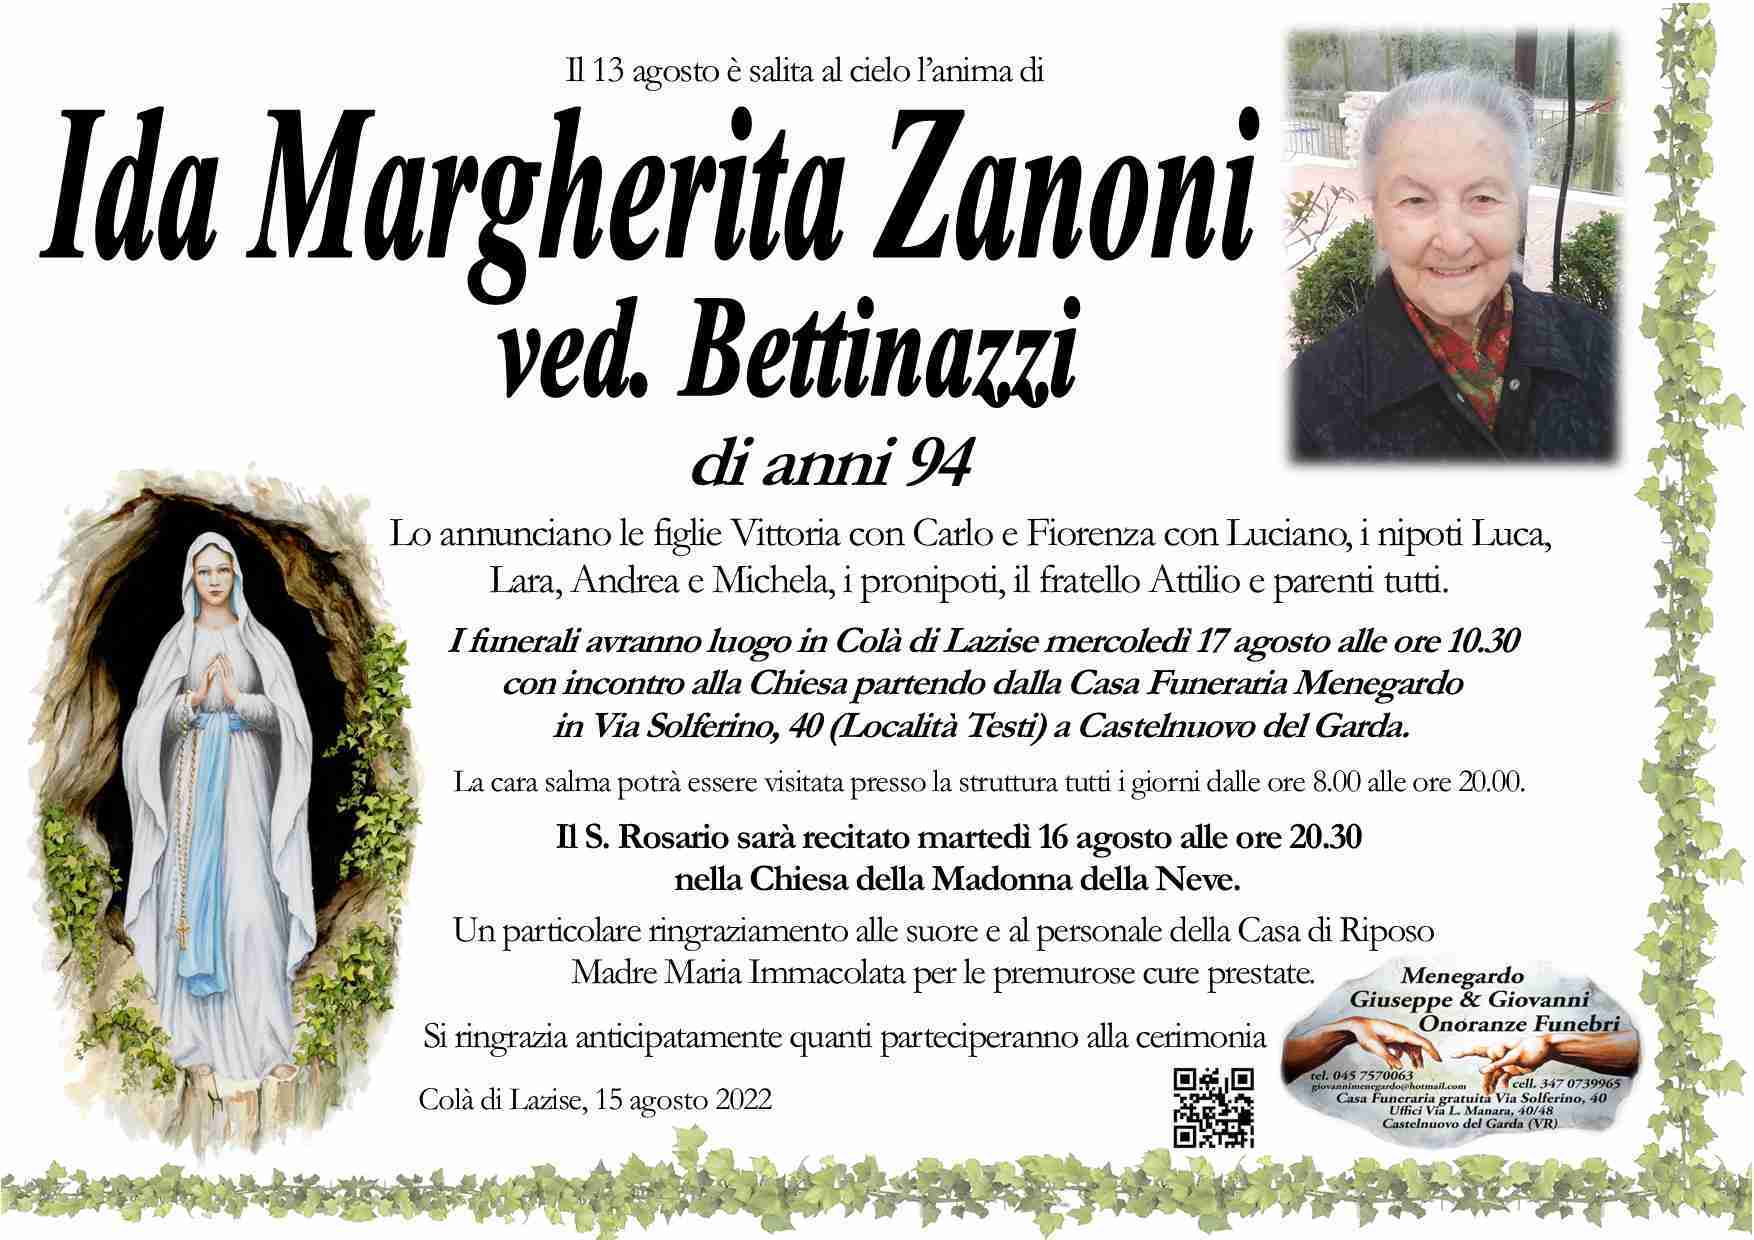 Ida Margherita Zanoni